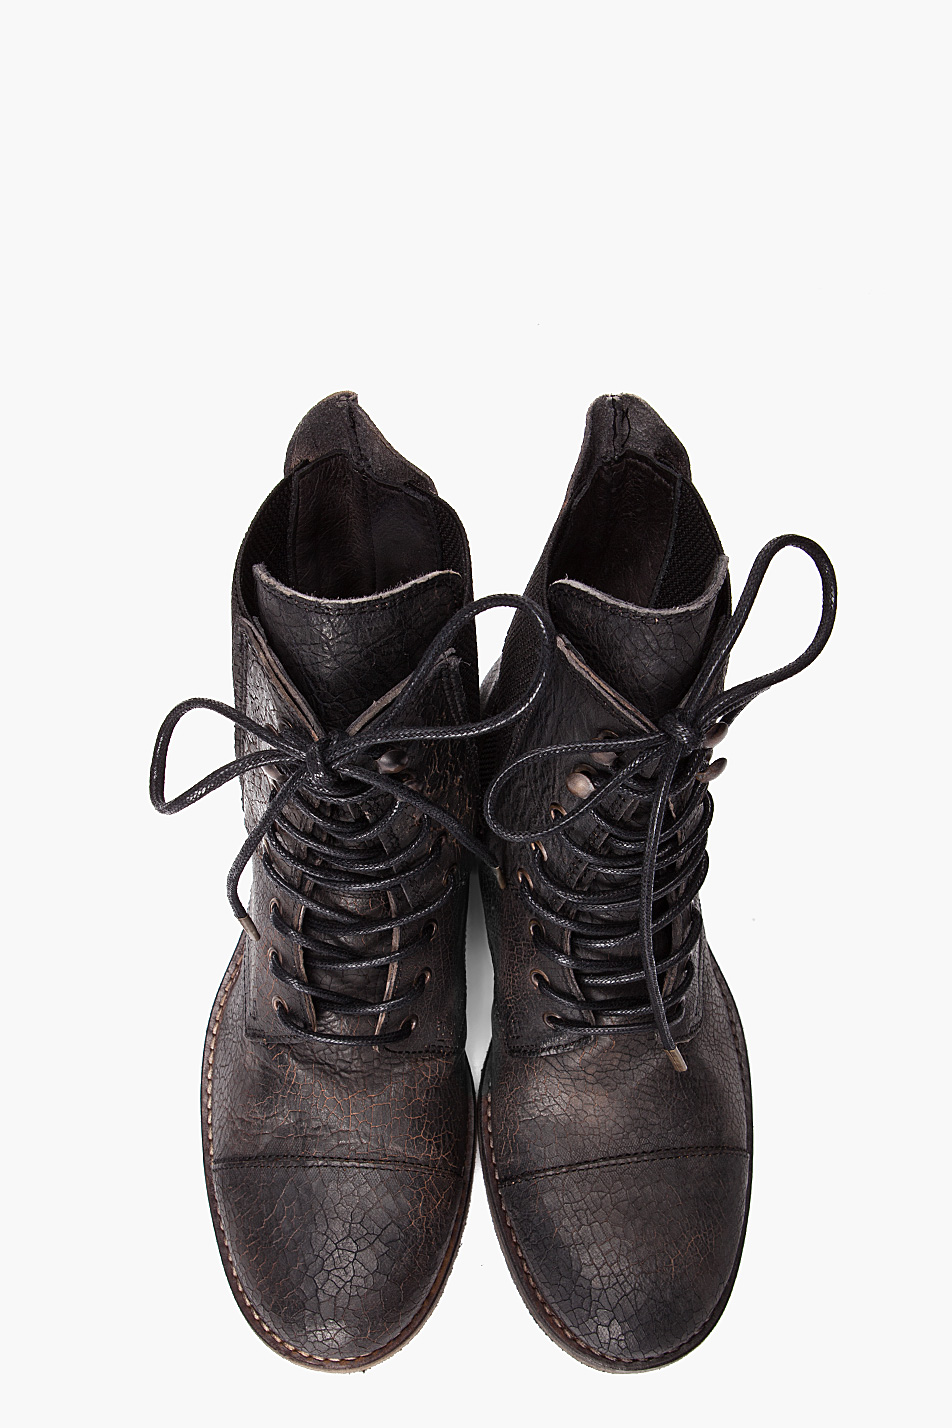 Lyst - Ksubi Raven Lace Boot in Black for Men